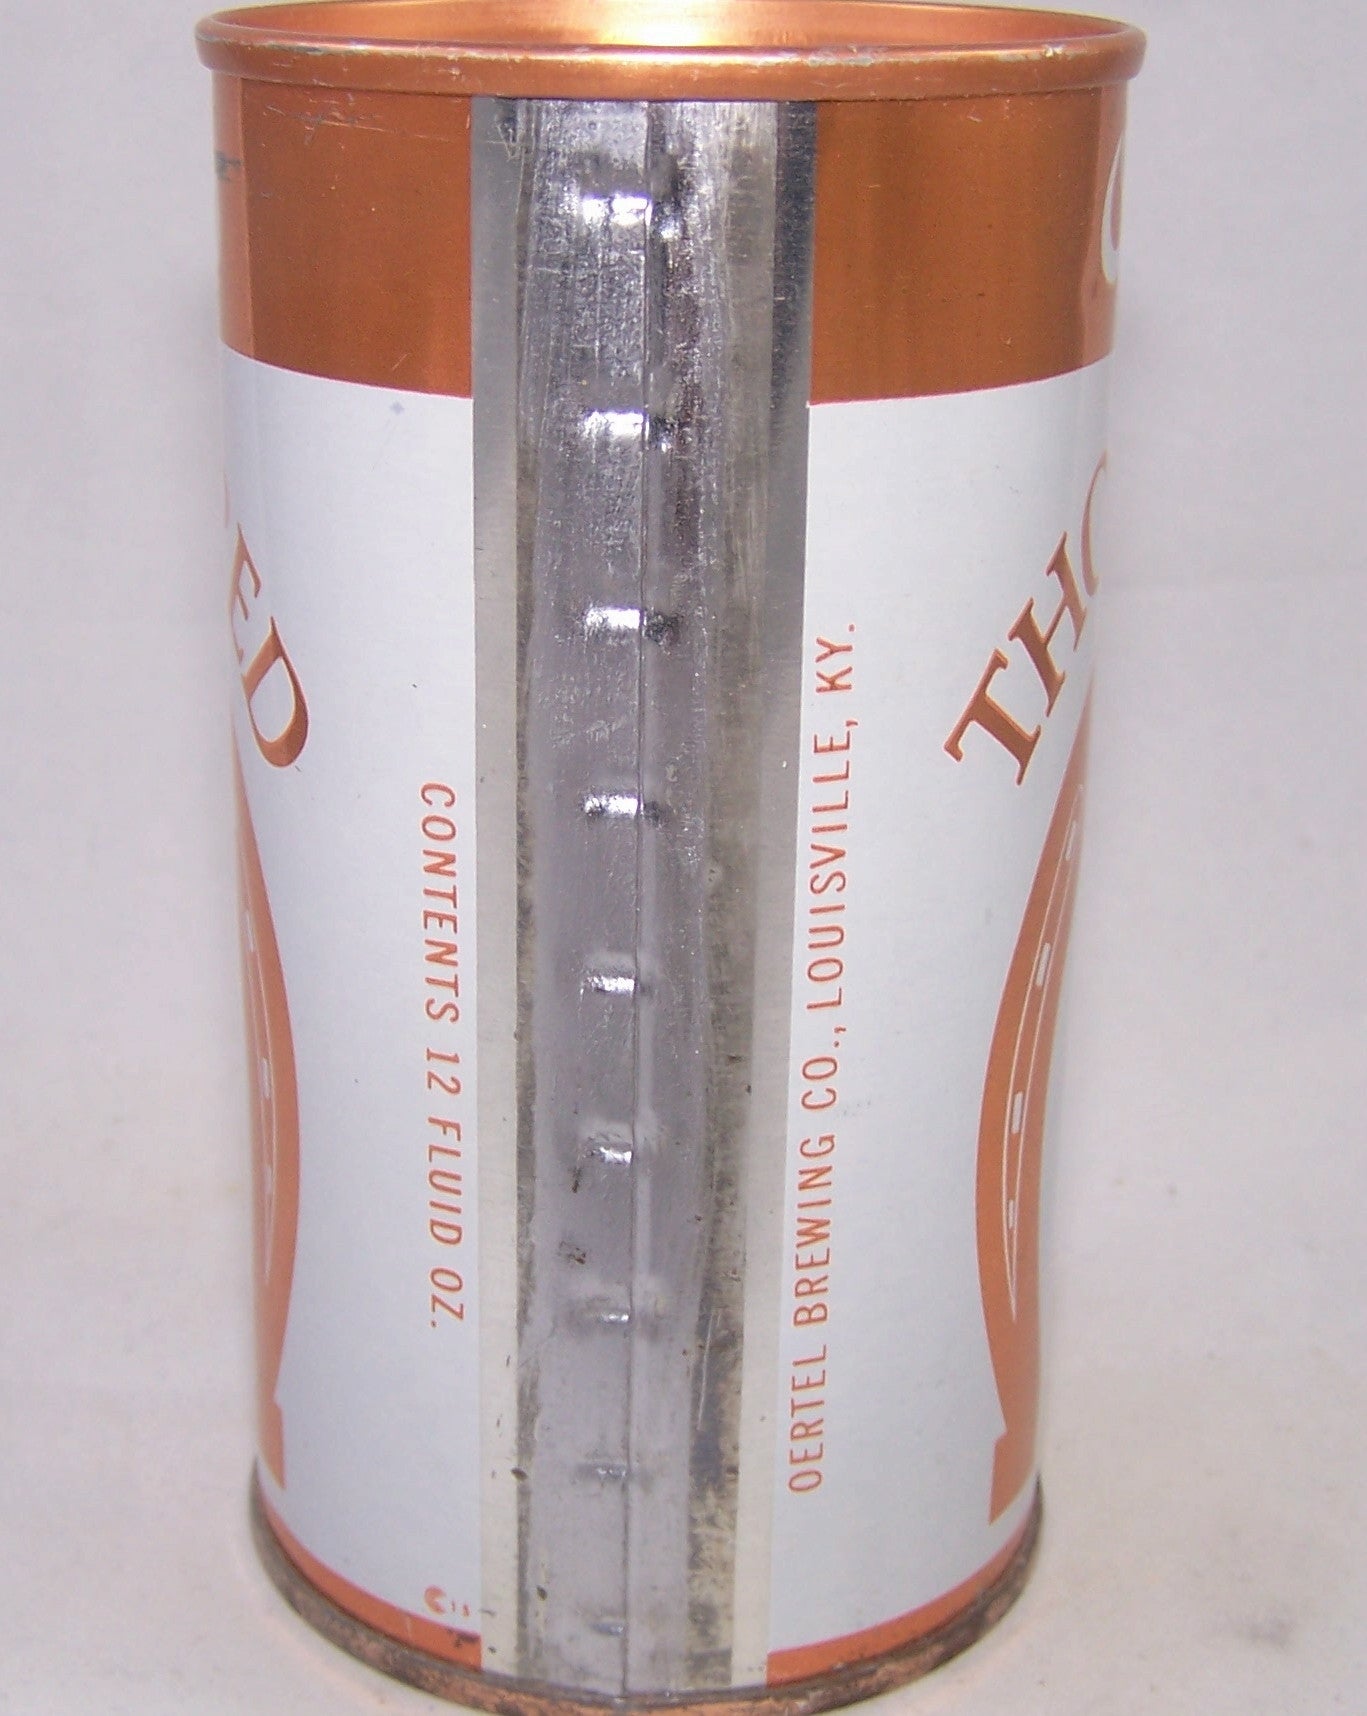 Oertels Thorobred Malt Liquor, USBC II 99-07, Grade 1/1+ Sold on 05/06/17